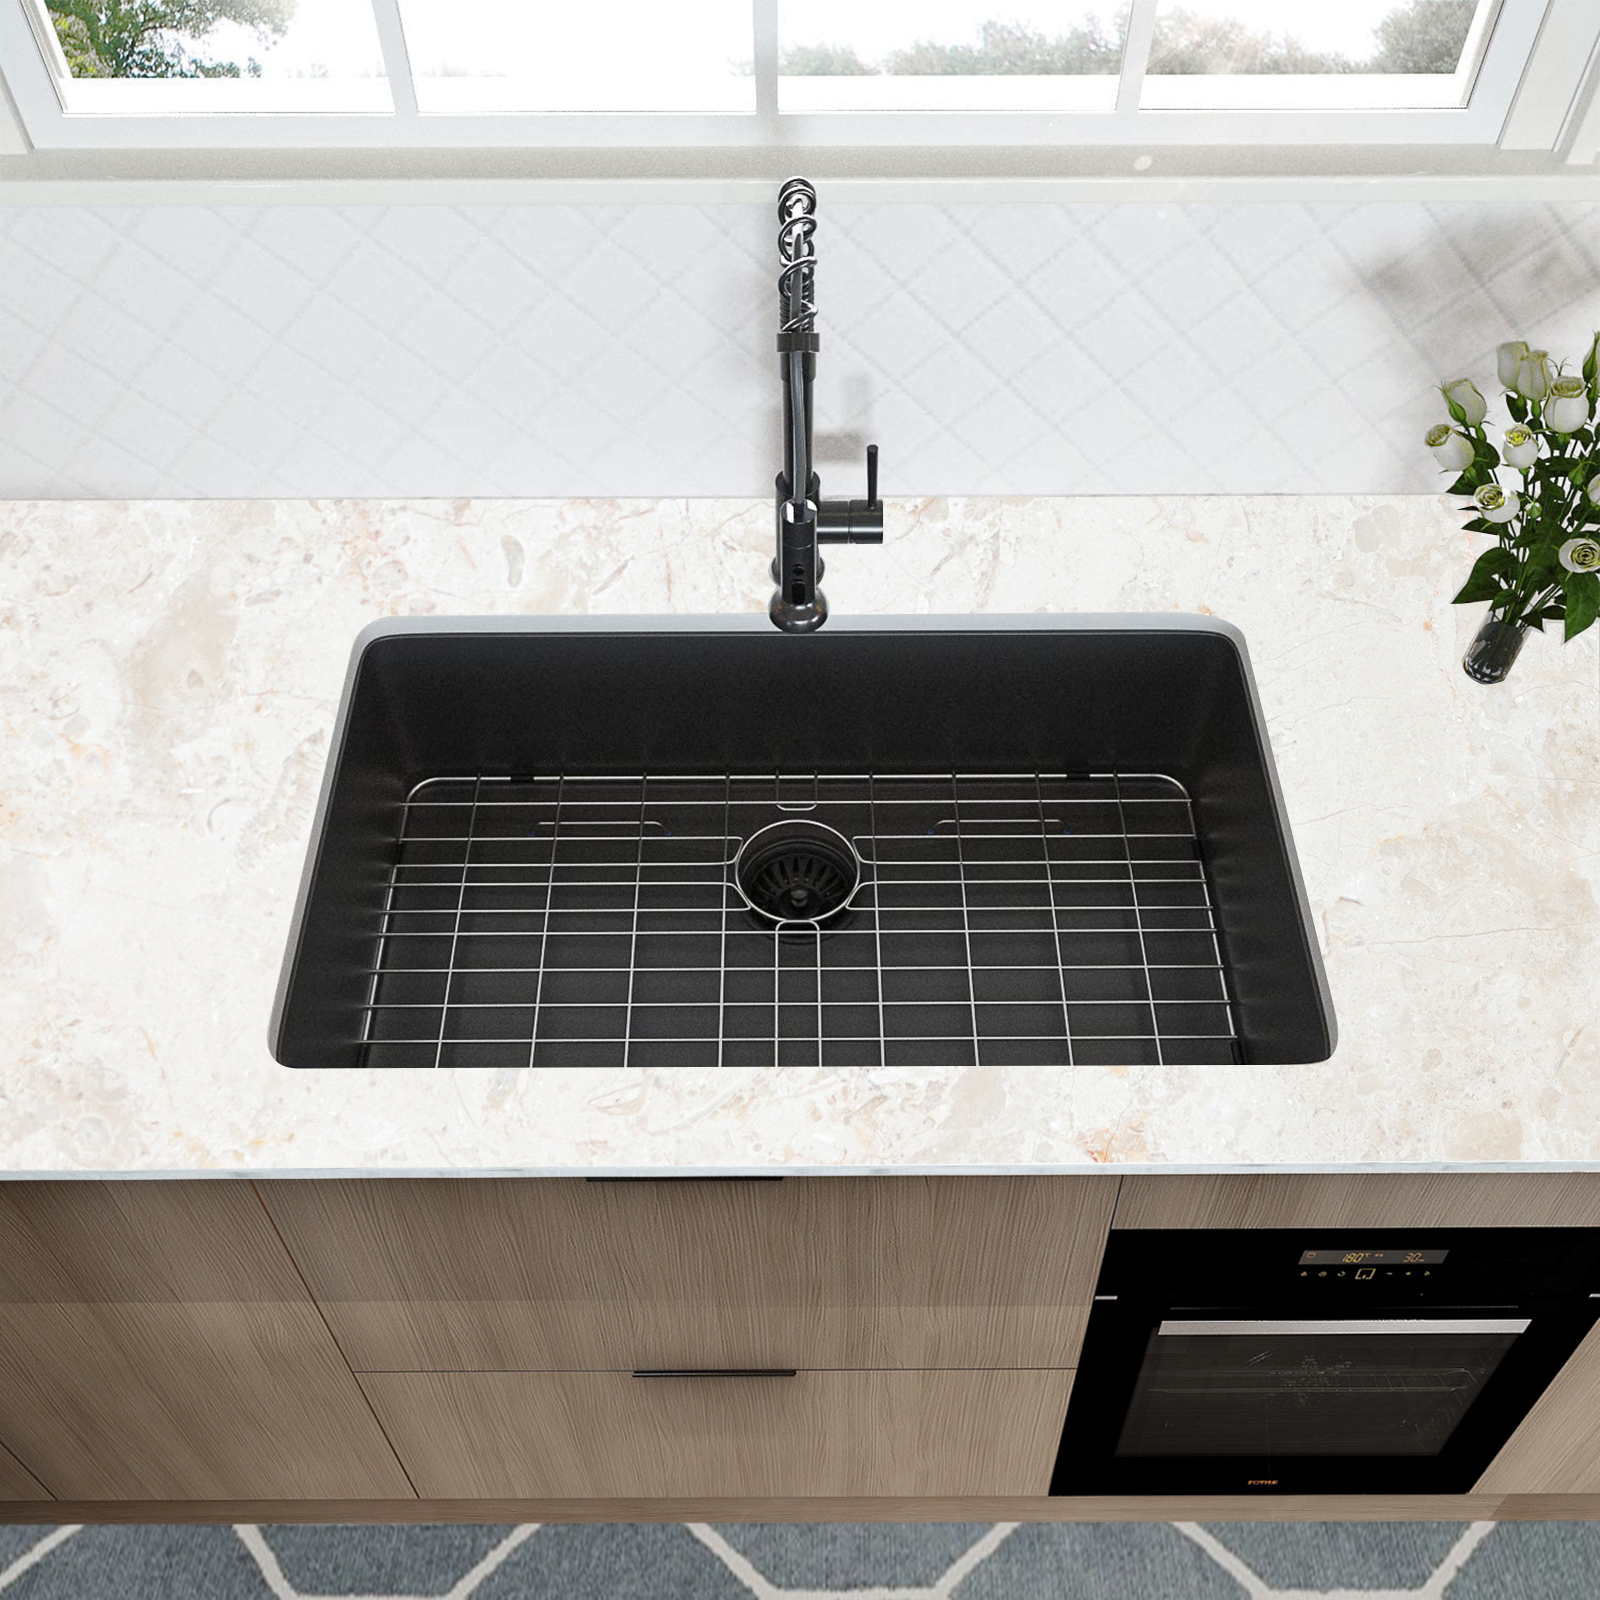 Black Stainless steel Double Bowl Undermount Kitchen Sink